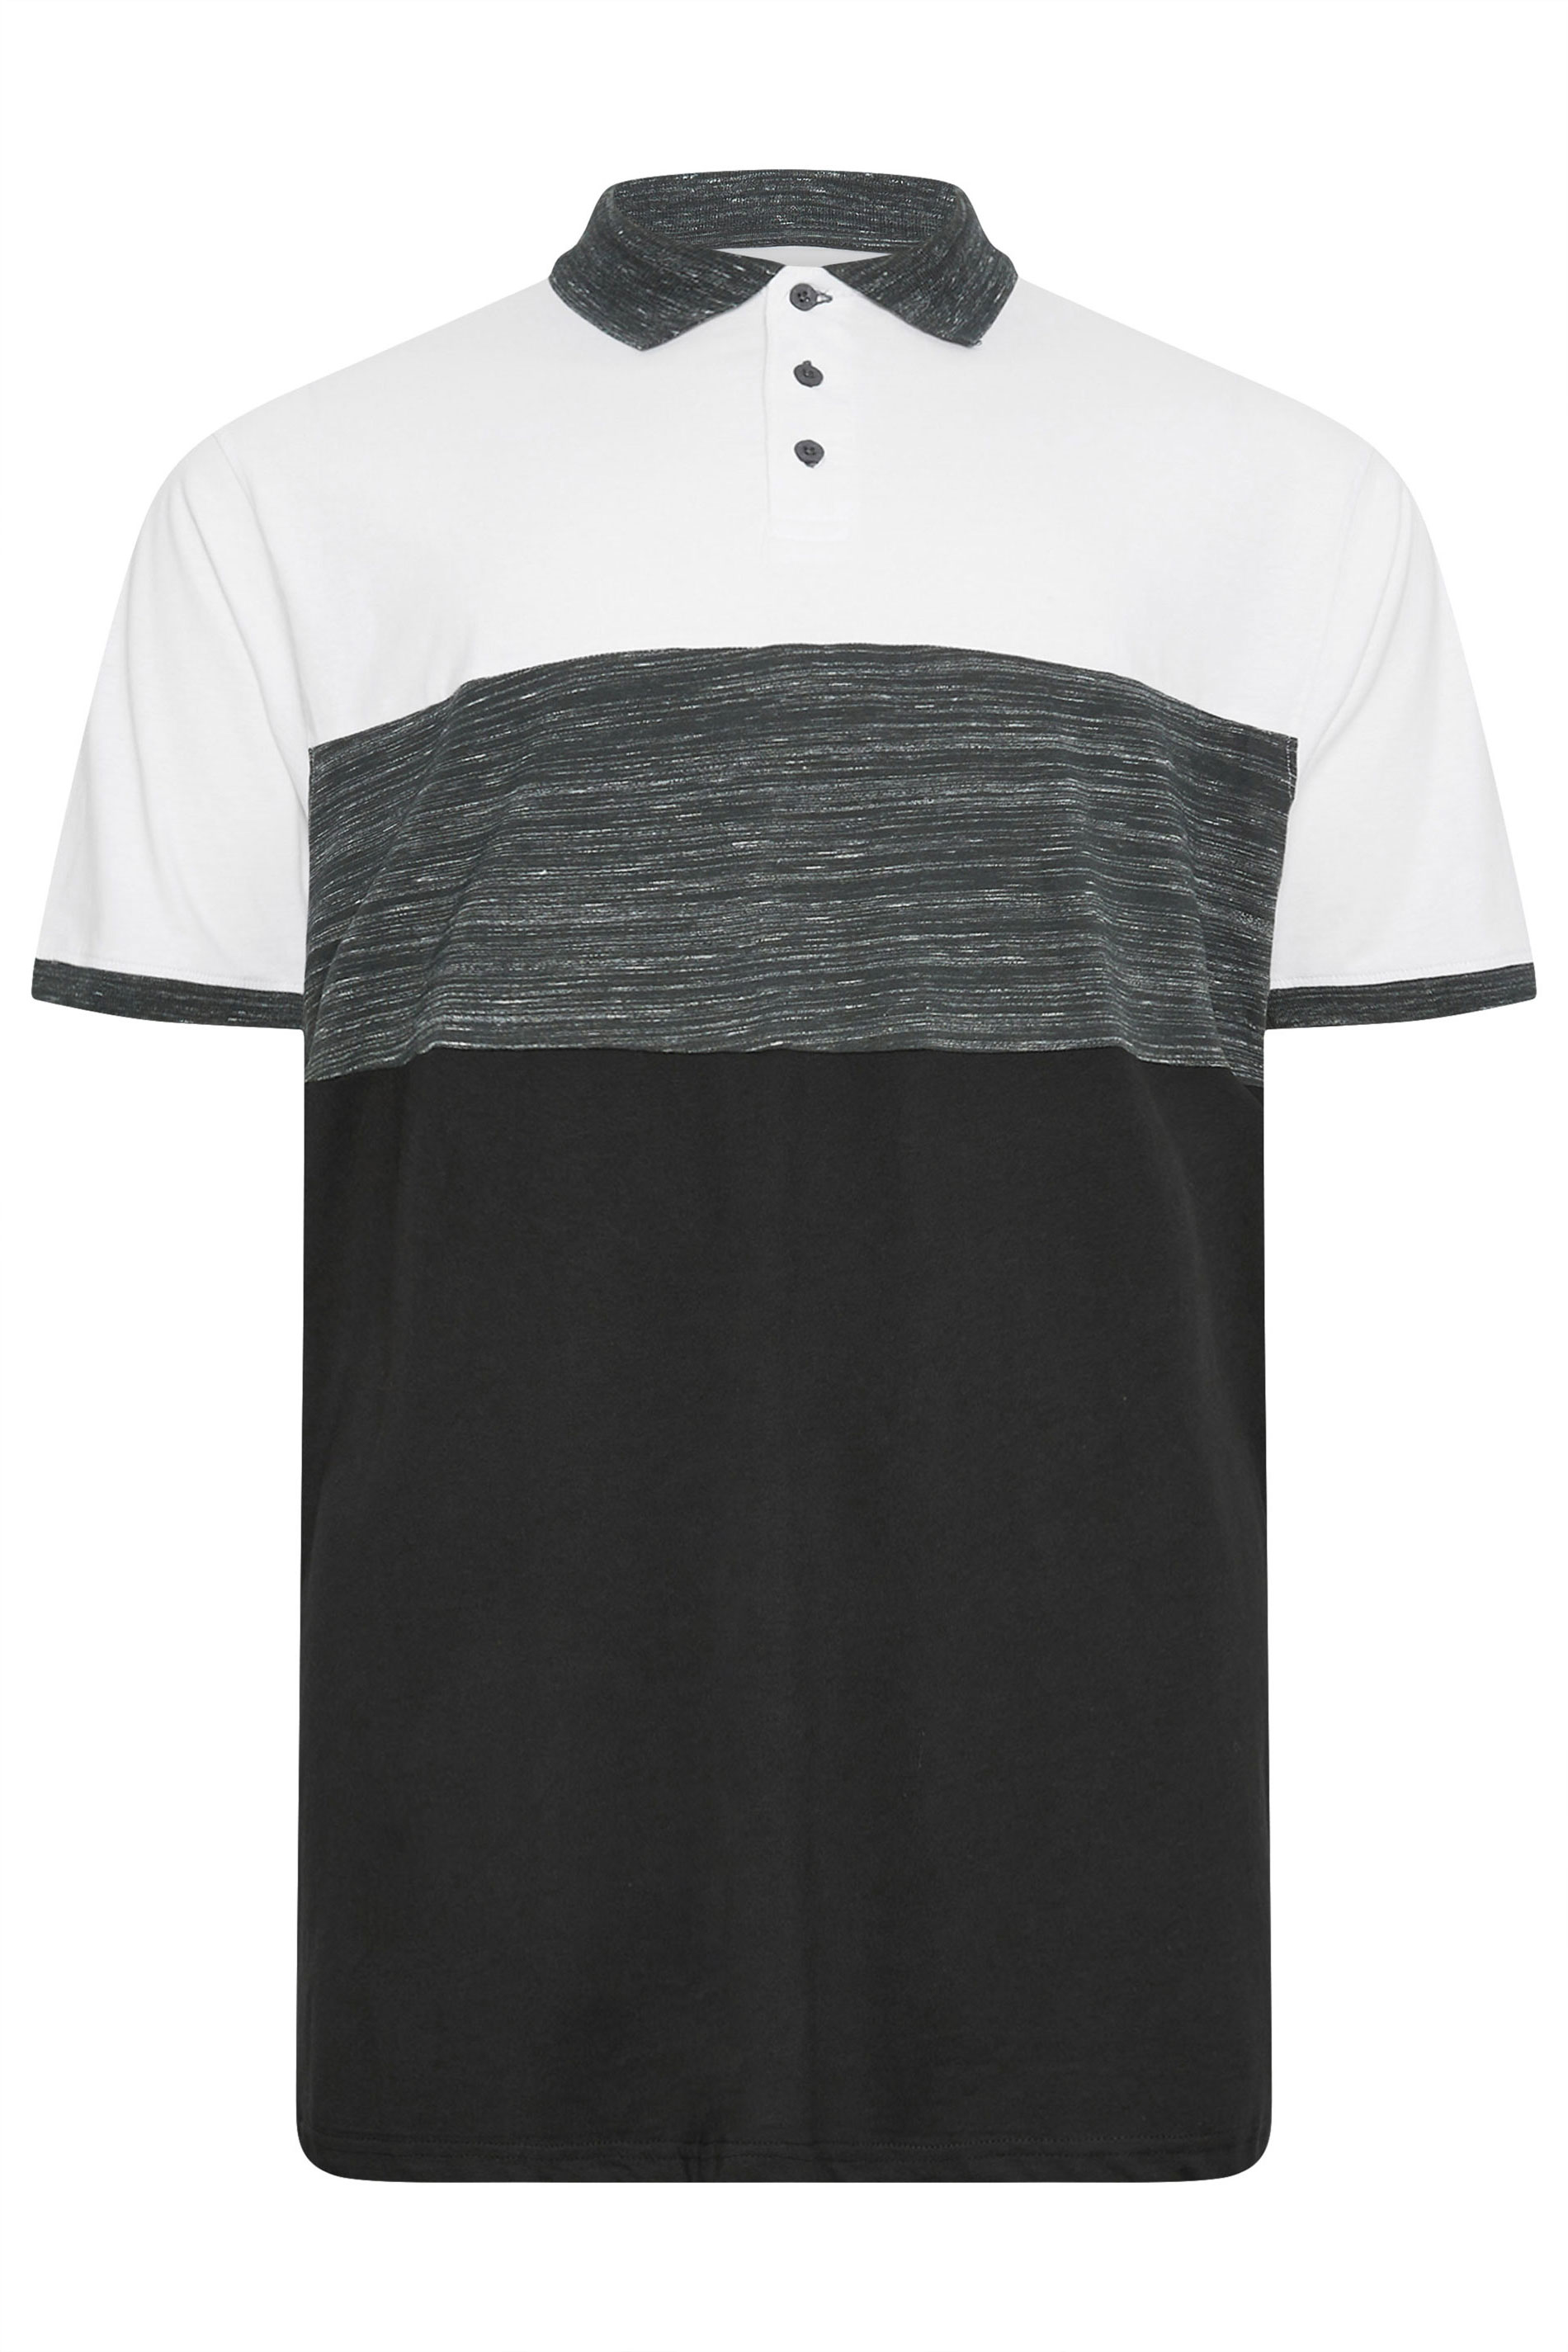 KAM Big & Tall Charcoal Grey Cut & Sew Polo Shirt | BadRhino 2